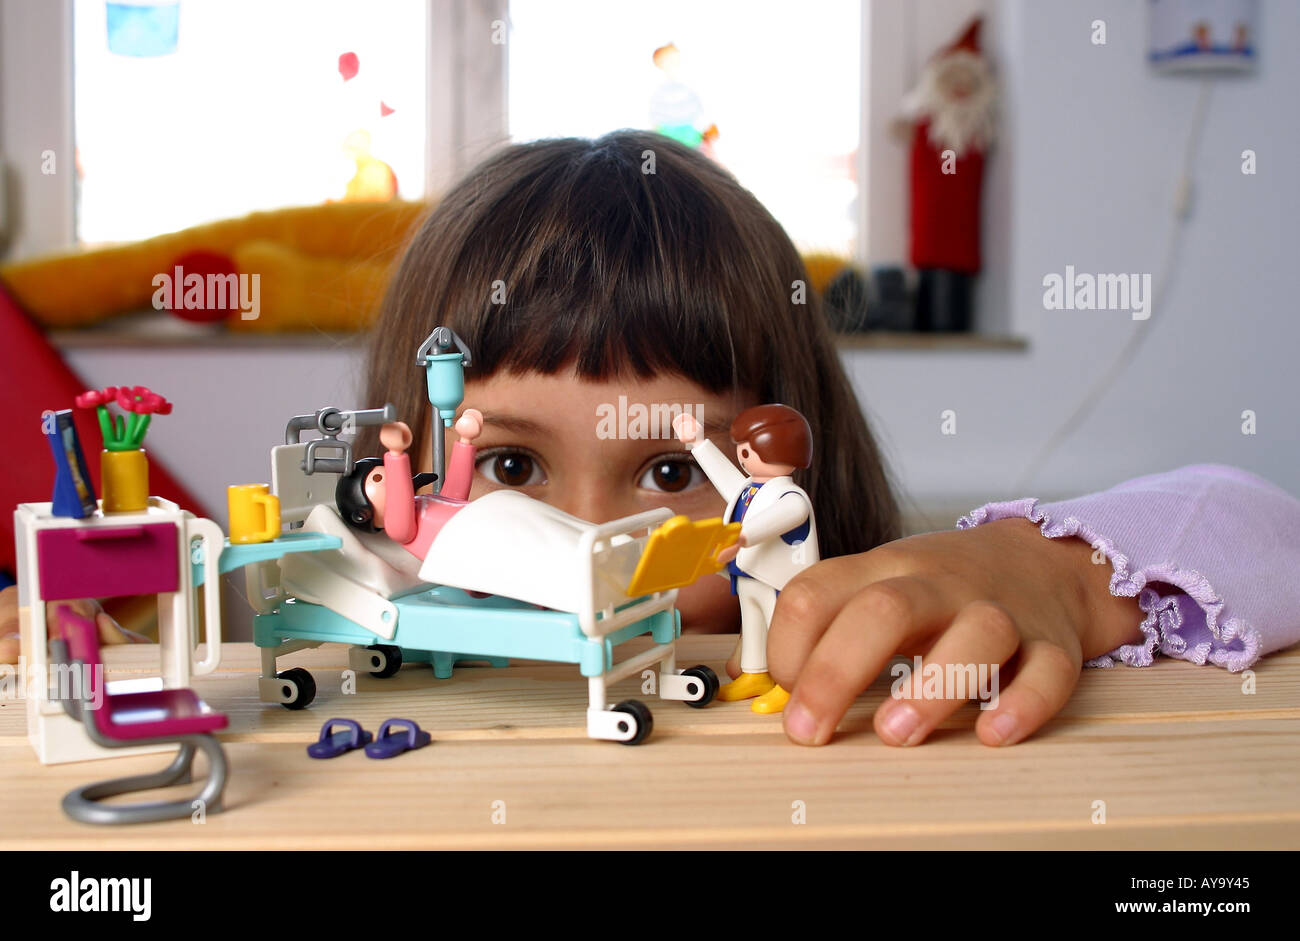 Kind spielt Pflegeszene mit Playmobil Figuren nach Stock Photo